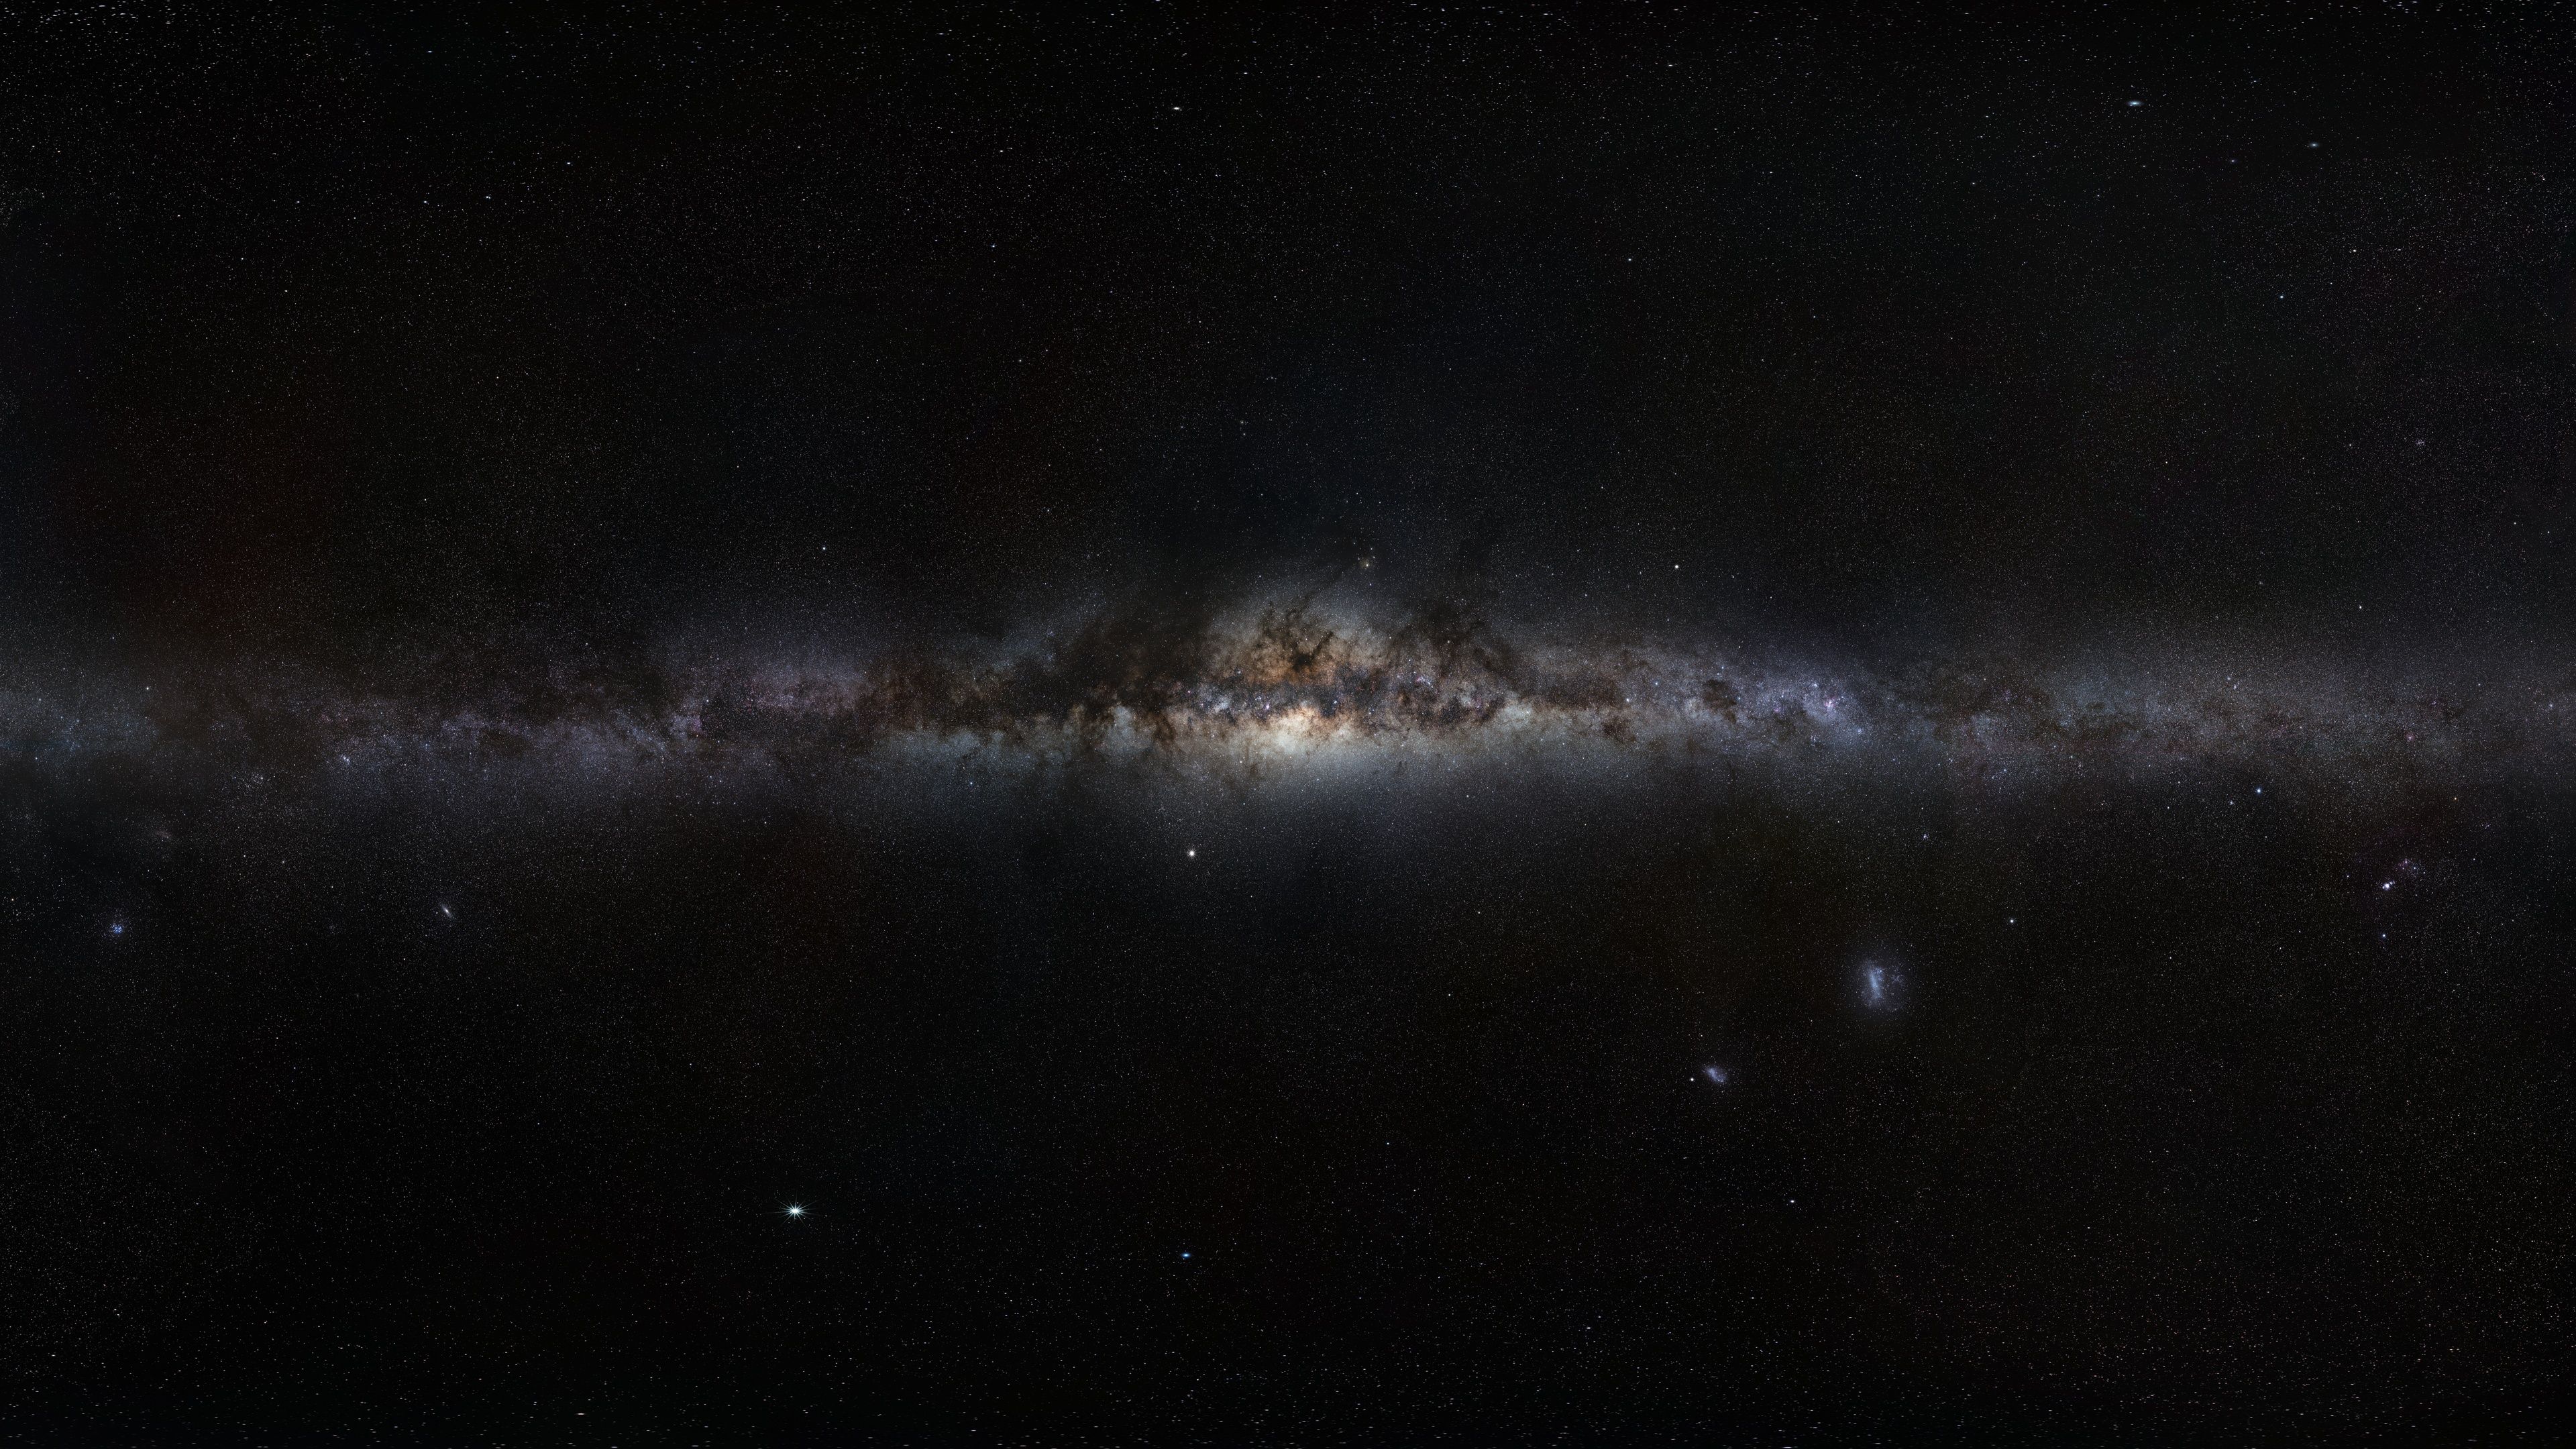 Dark Galaxy Wallpaper Free Dark Galaxy Background